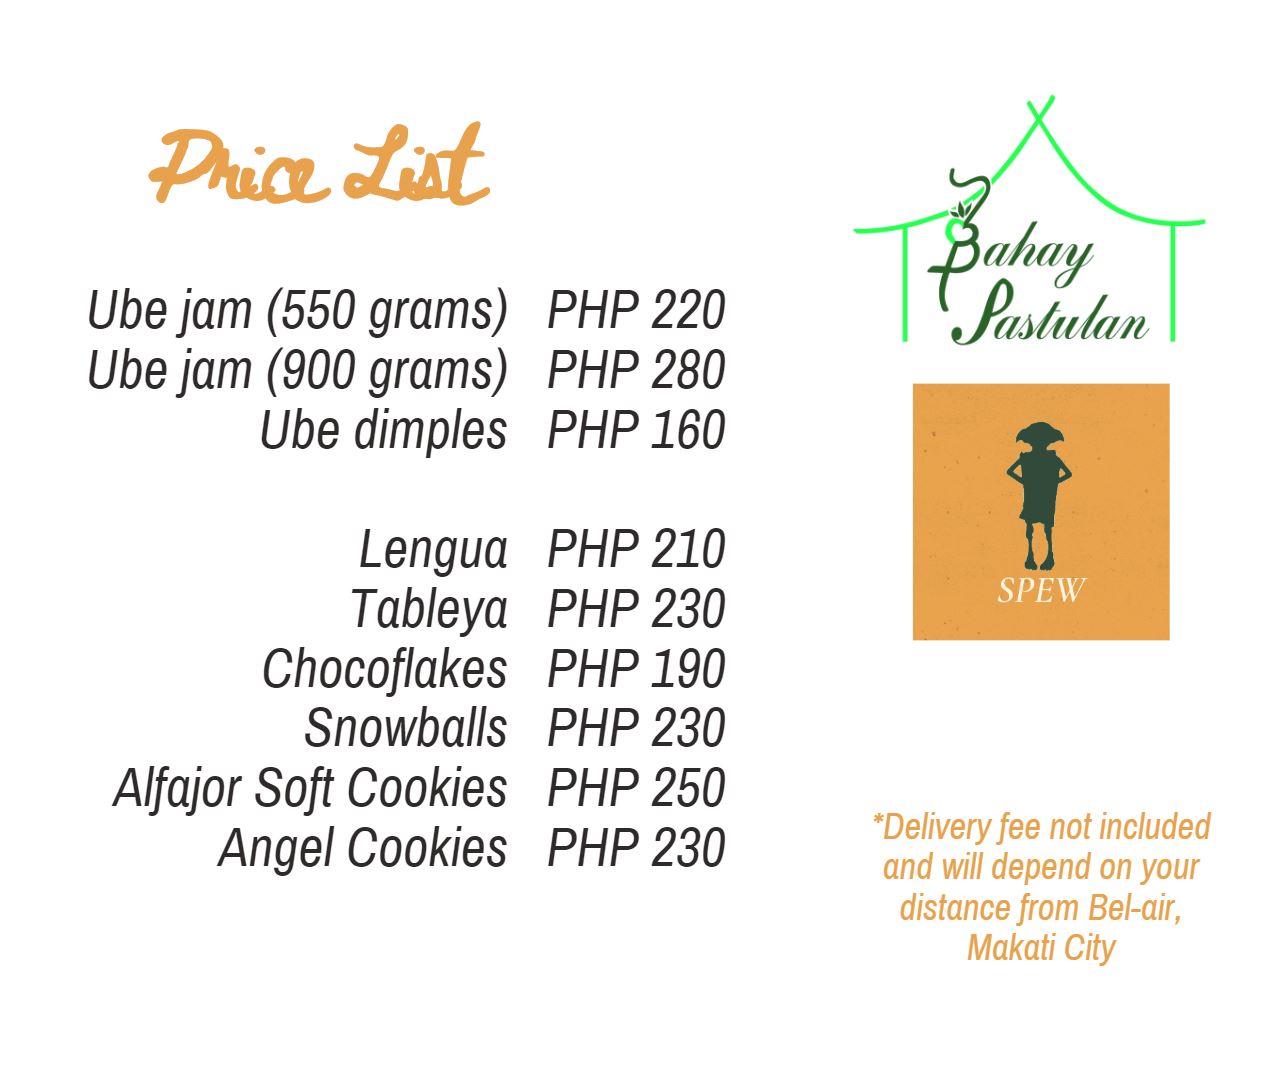 Good Shepherd Sisters' Bahay Pastulan Tagaytay price list